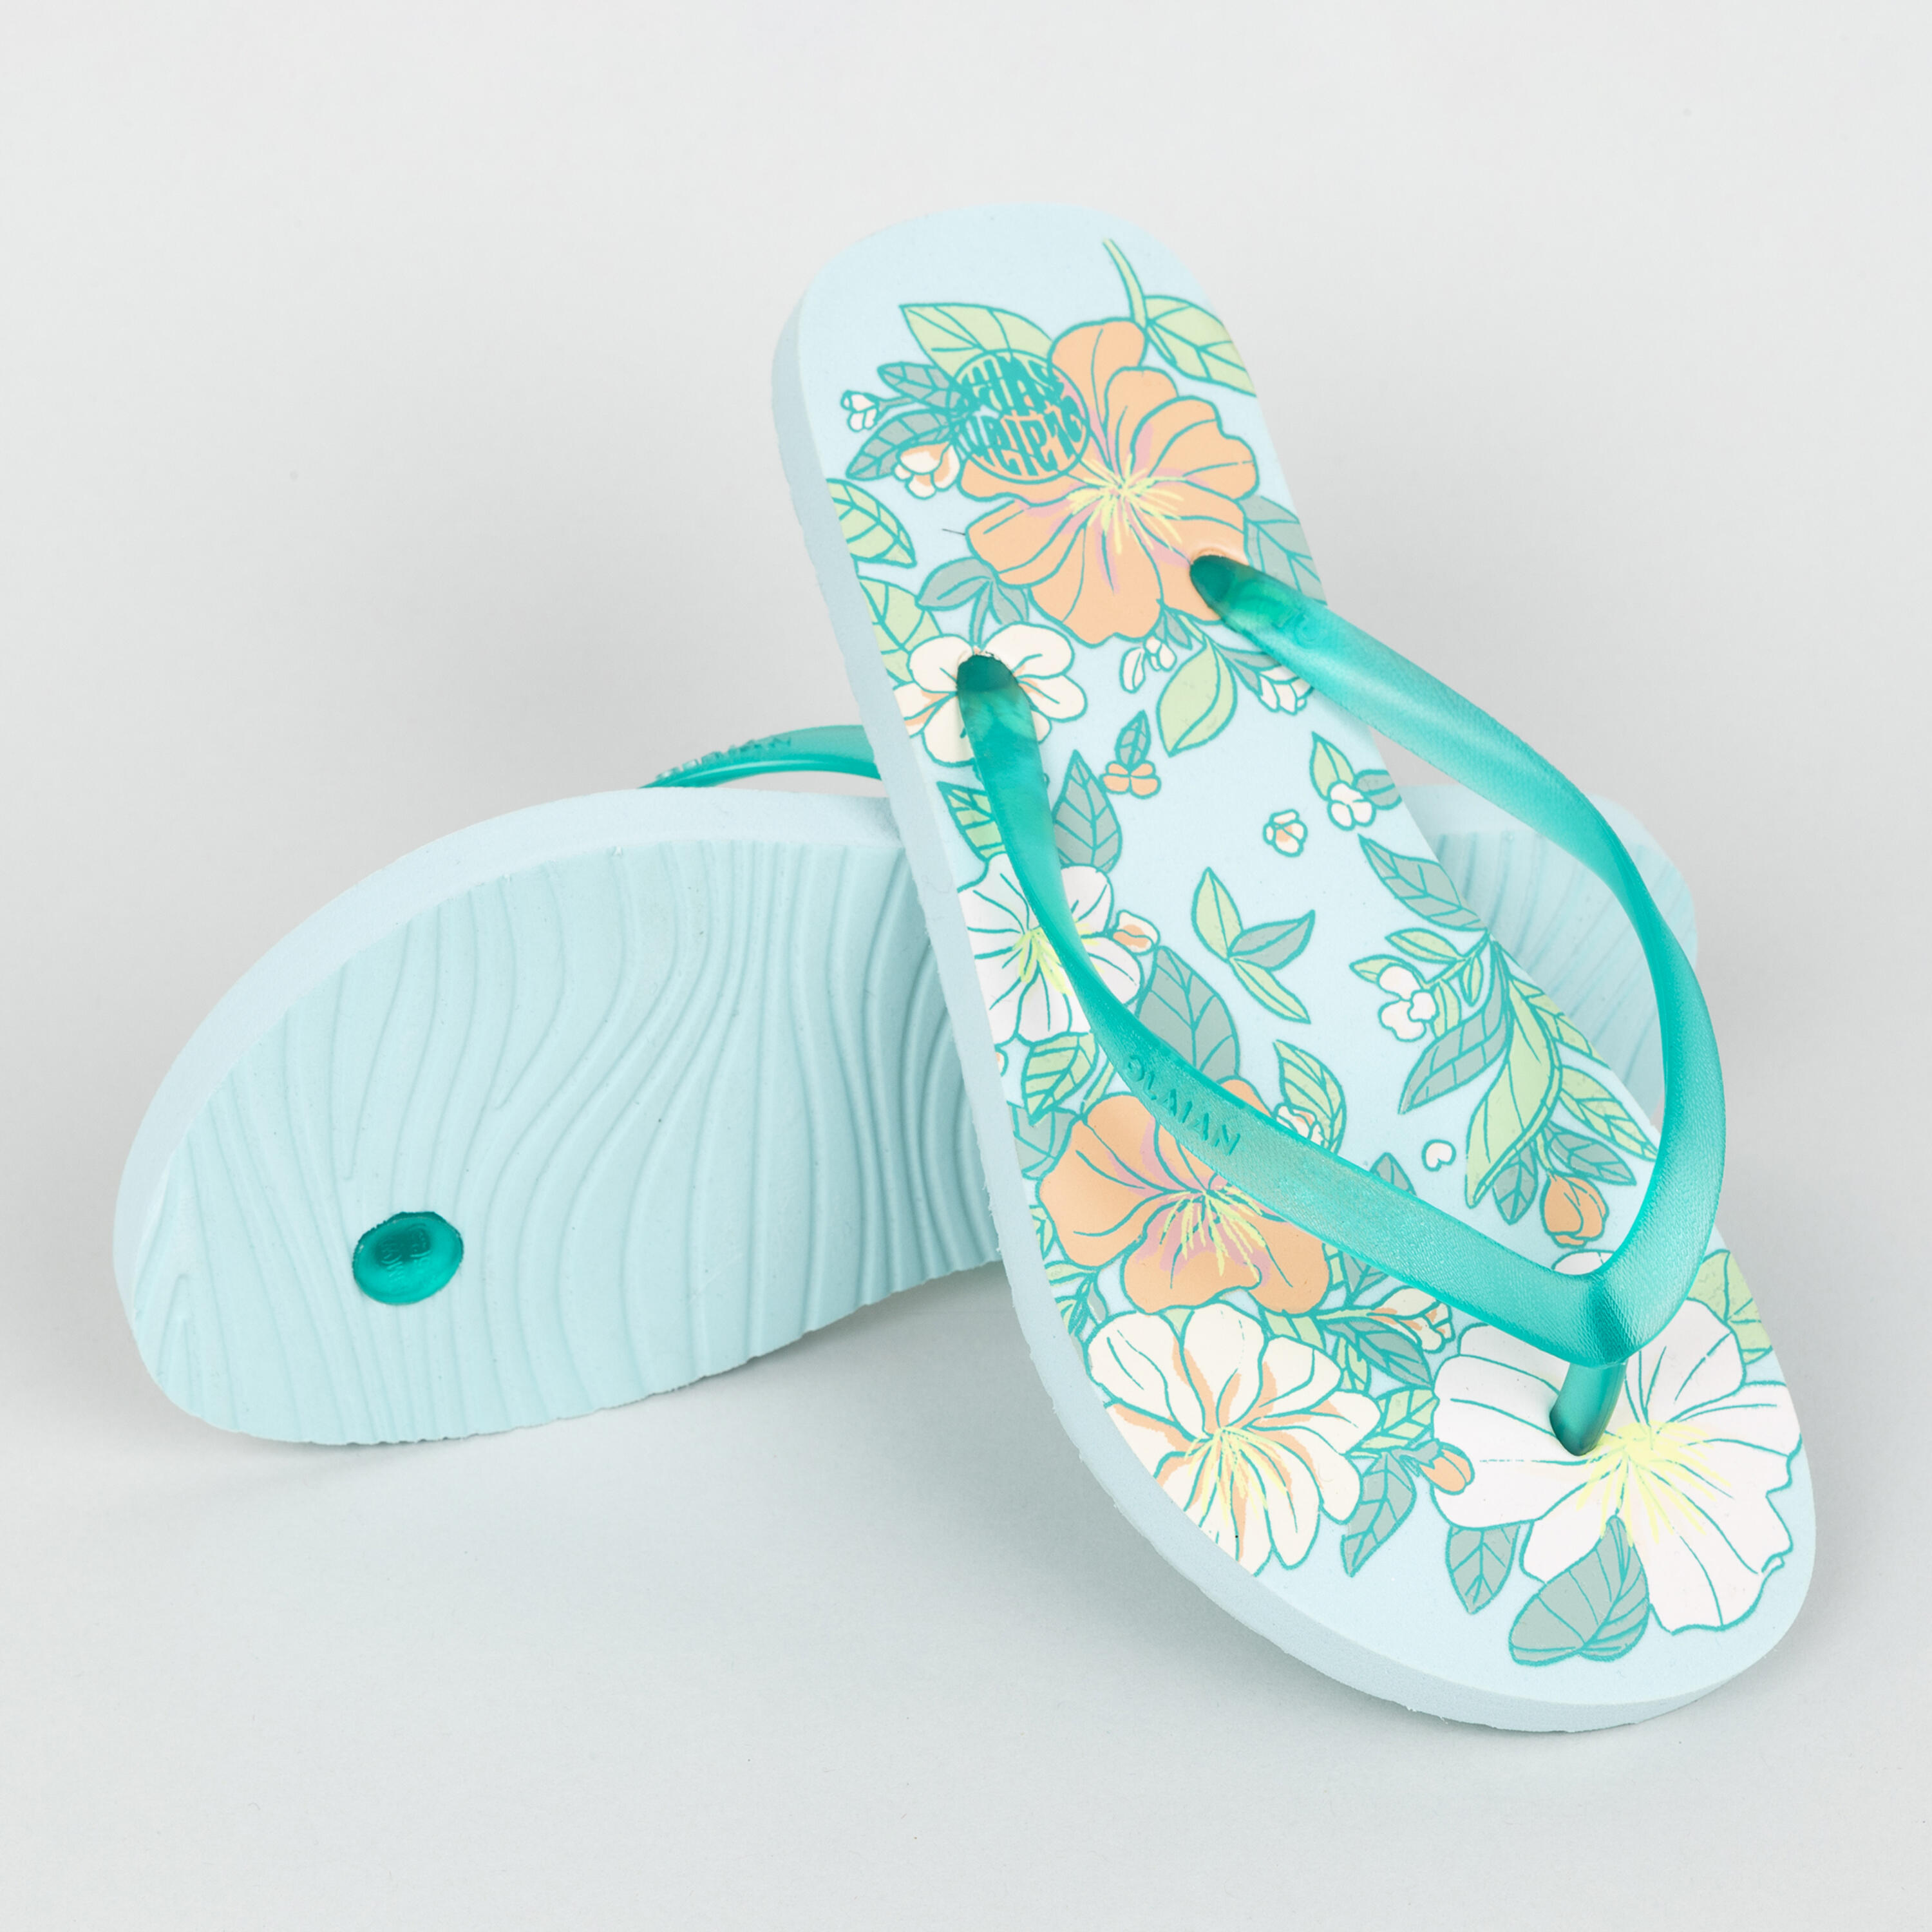 Grls' Flip-Flops - 120 Flower turquoise 4/5